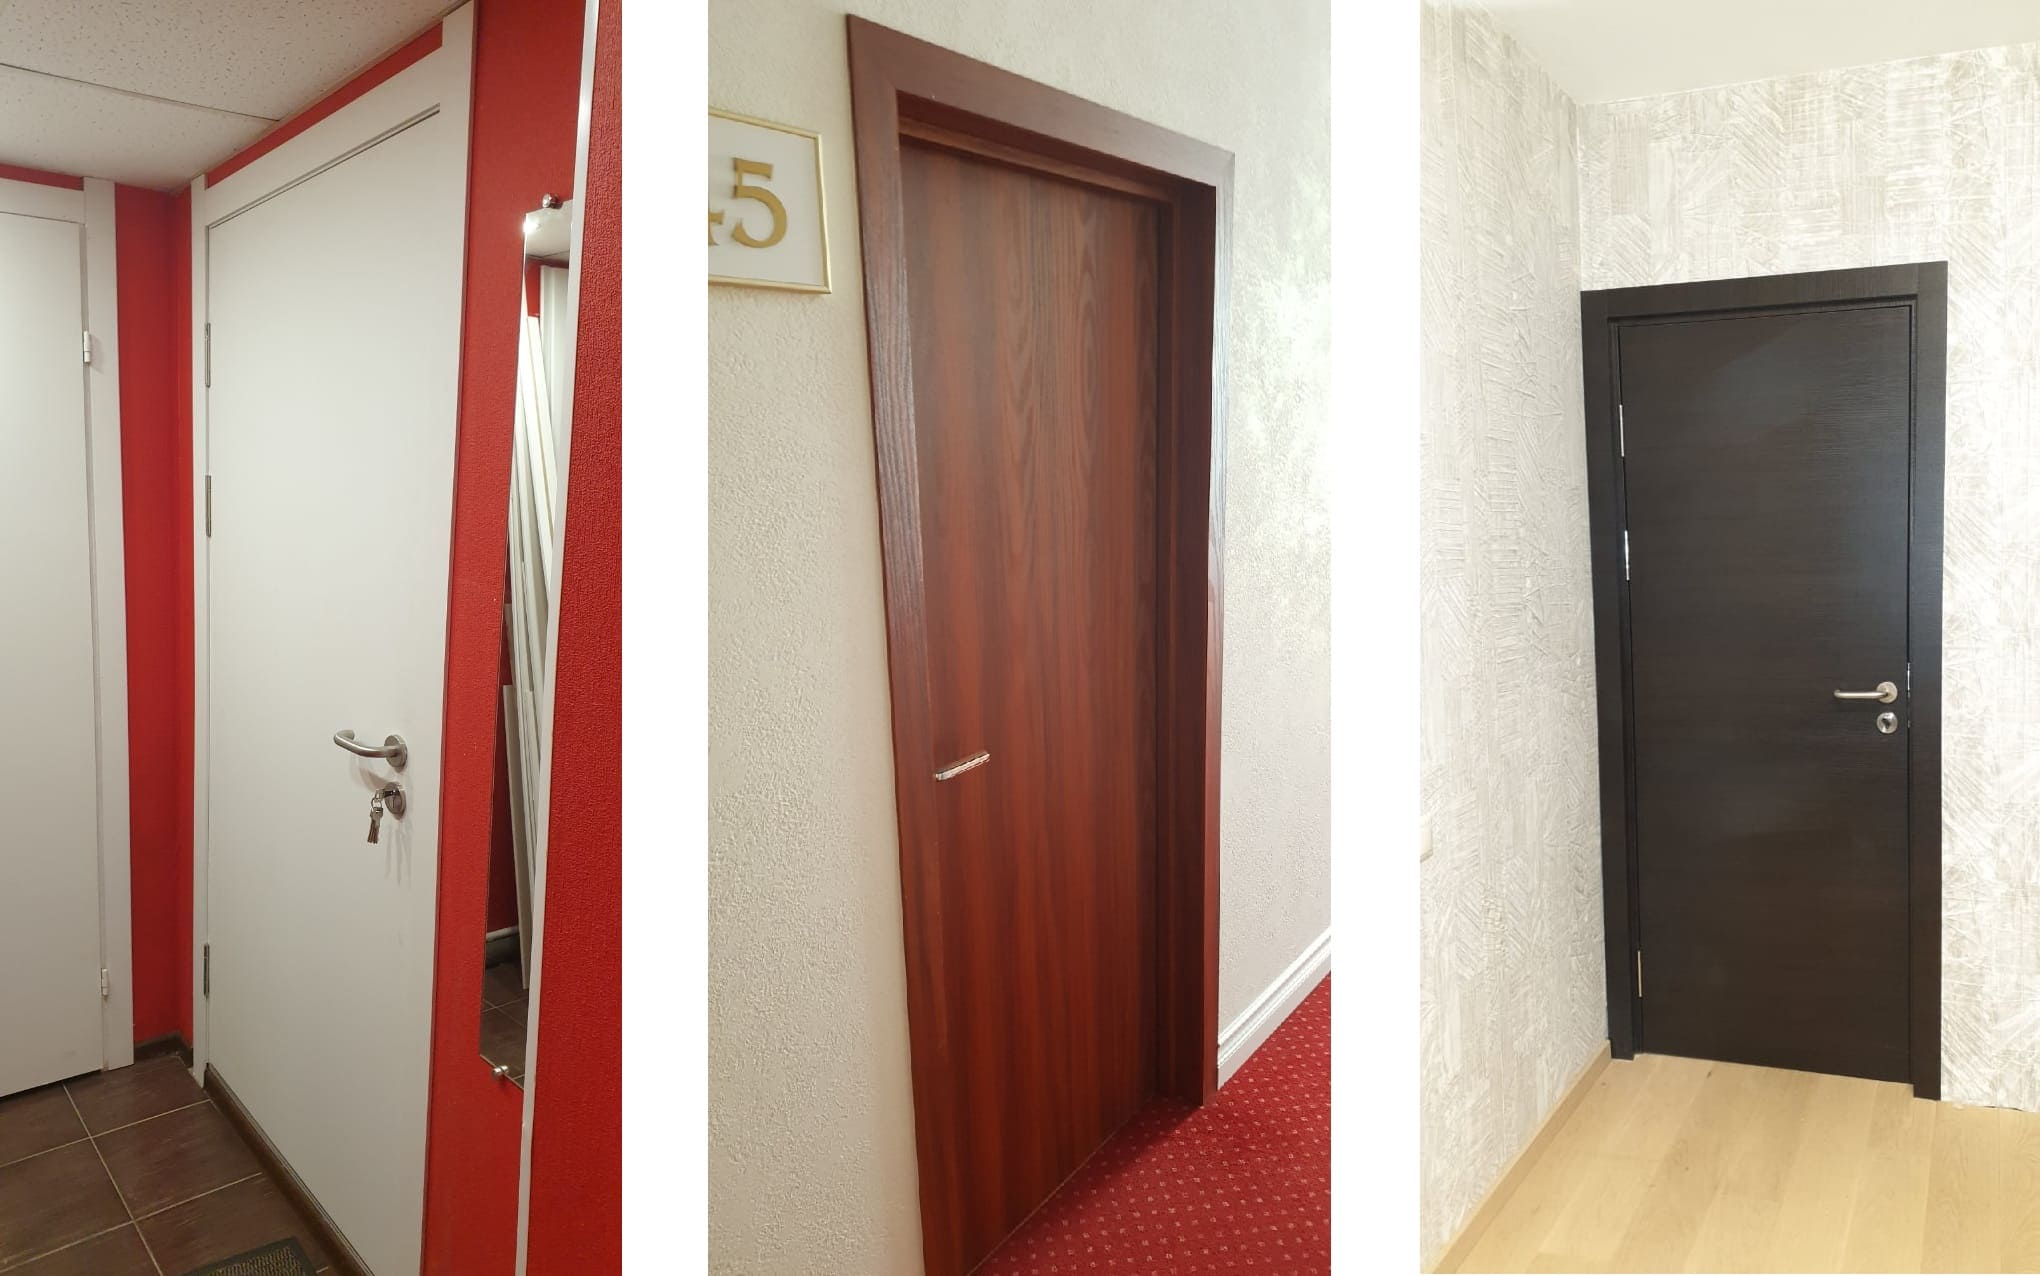 Двери в номерах отелей 3 звезды от производителя "Двери Остиум" в Минске